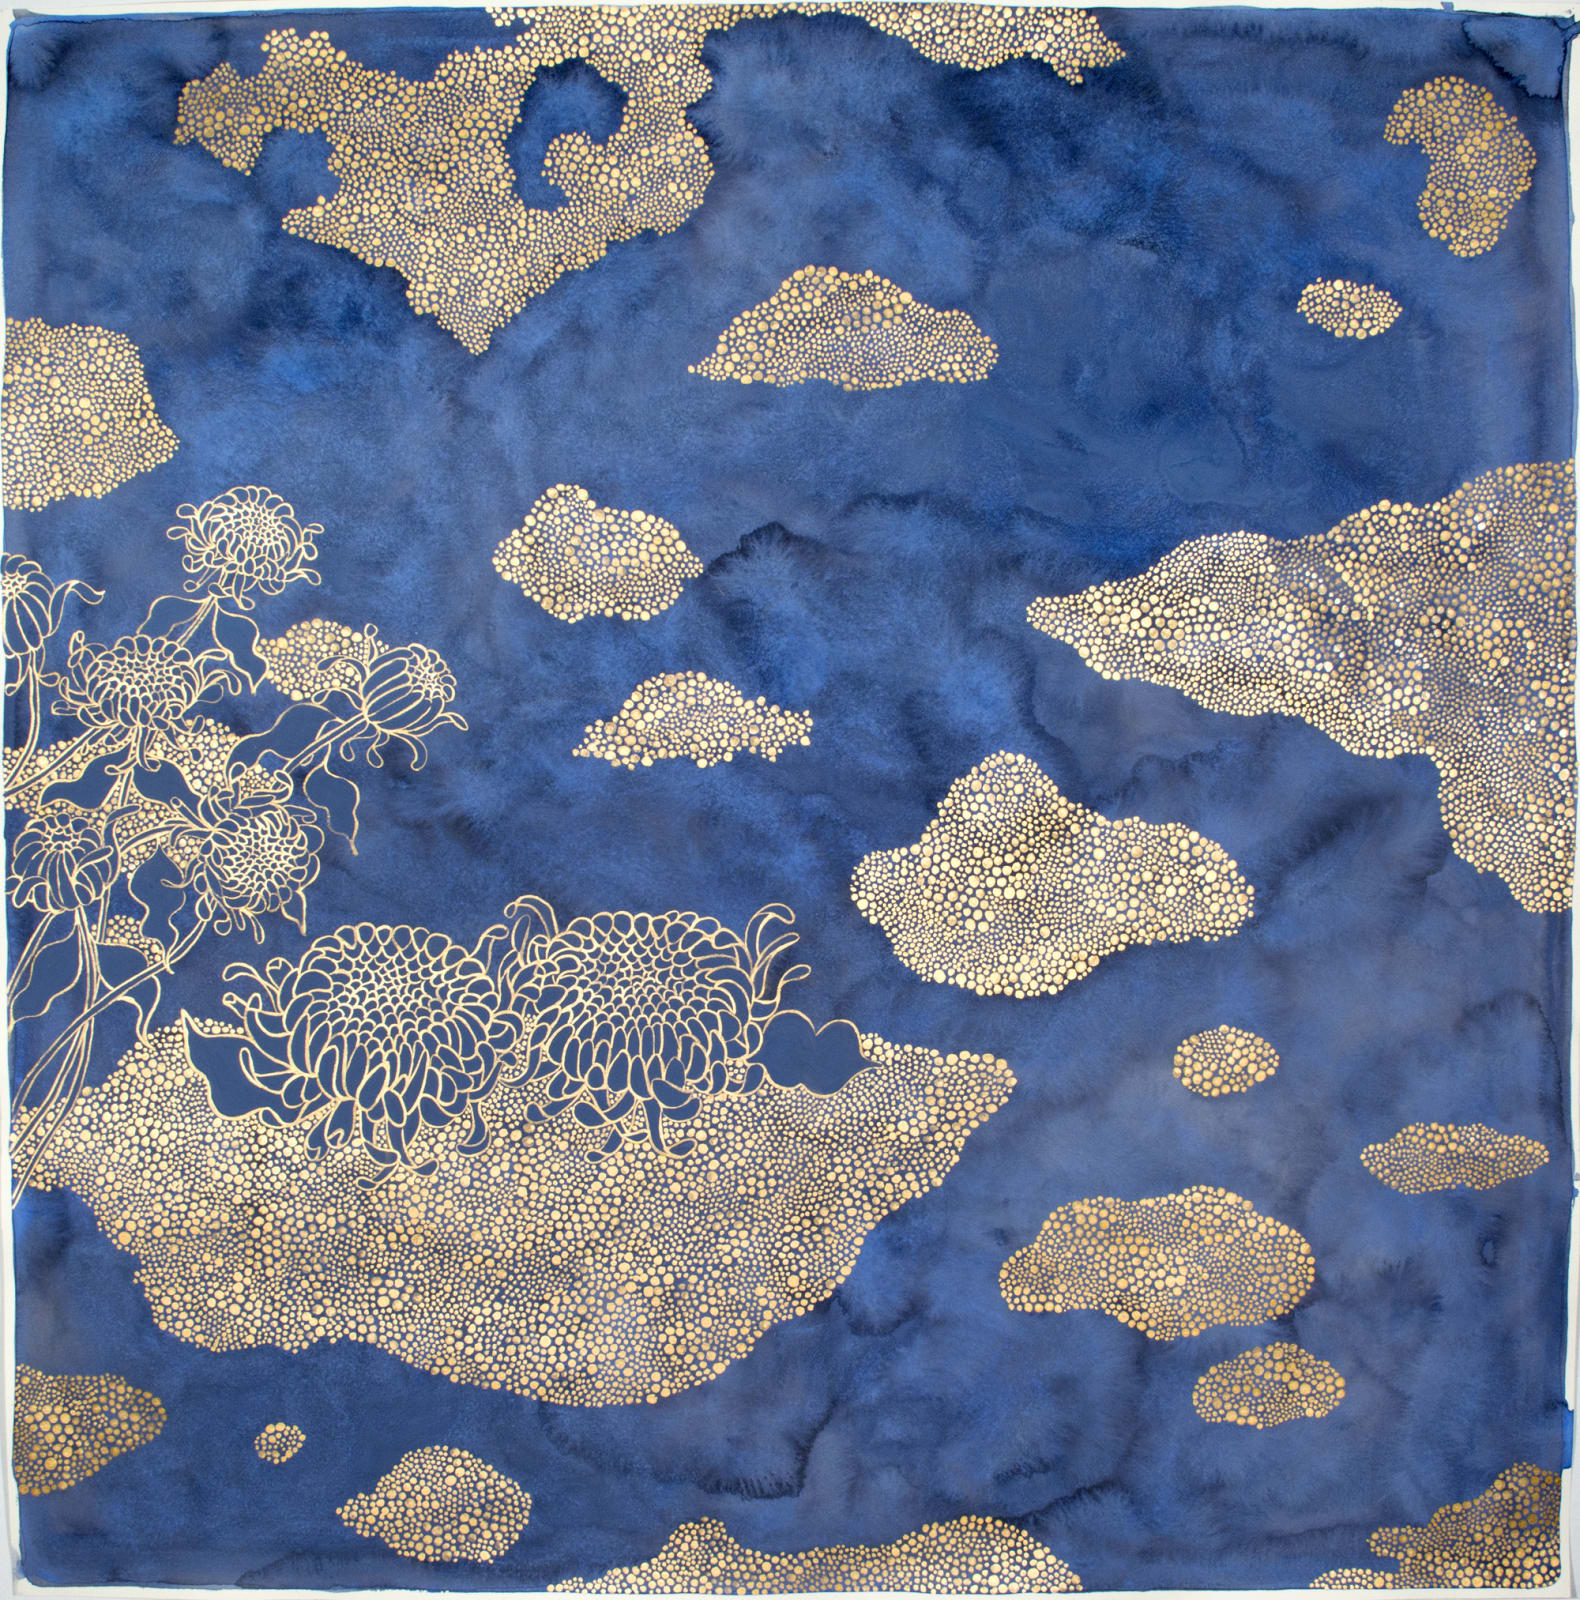 Crystal Liu, the lake, "in dreams", 2015